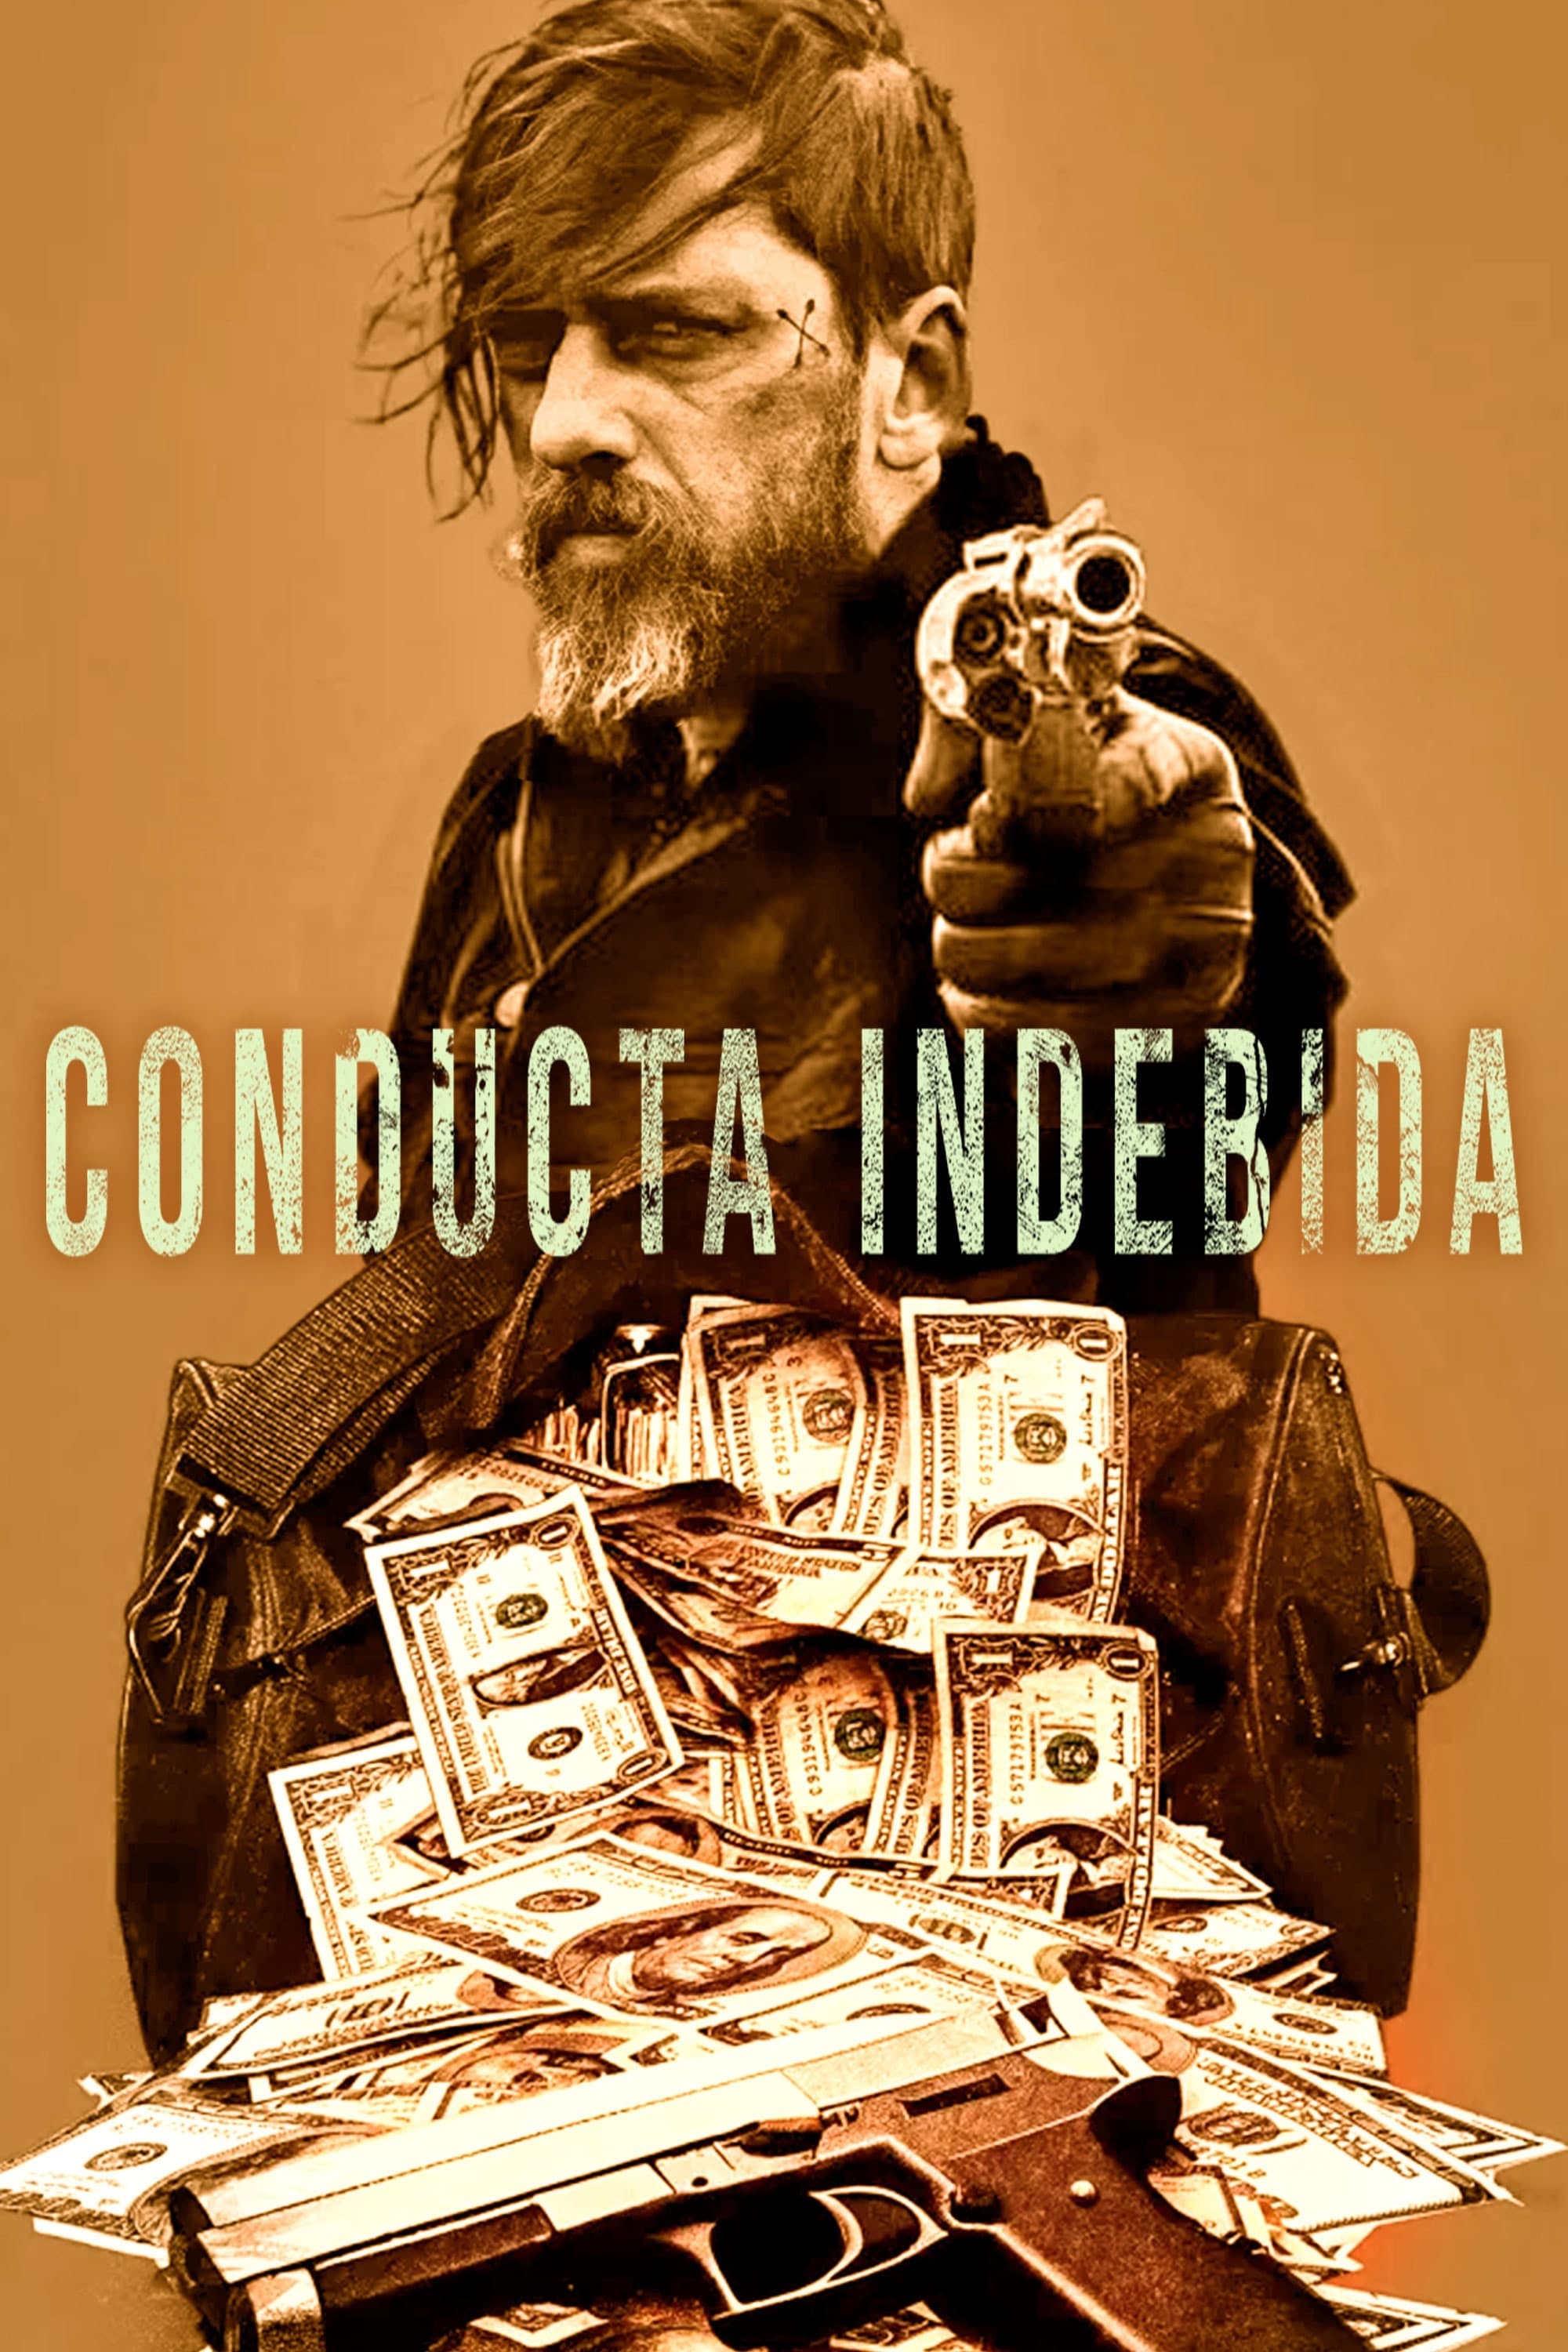 Conducta Indebida (2021)